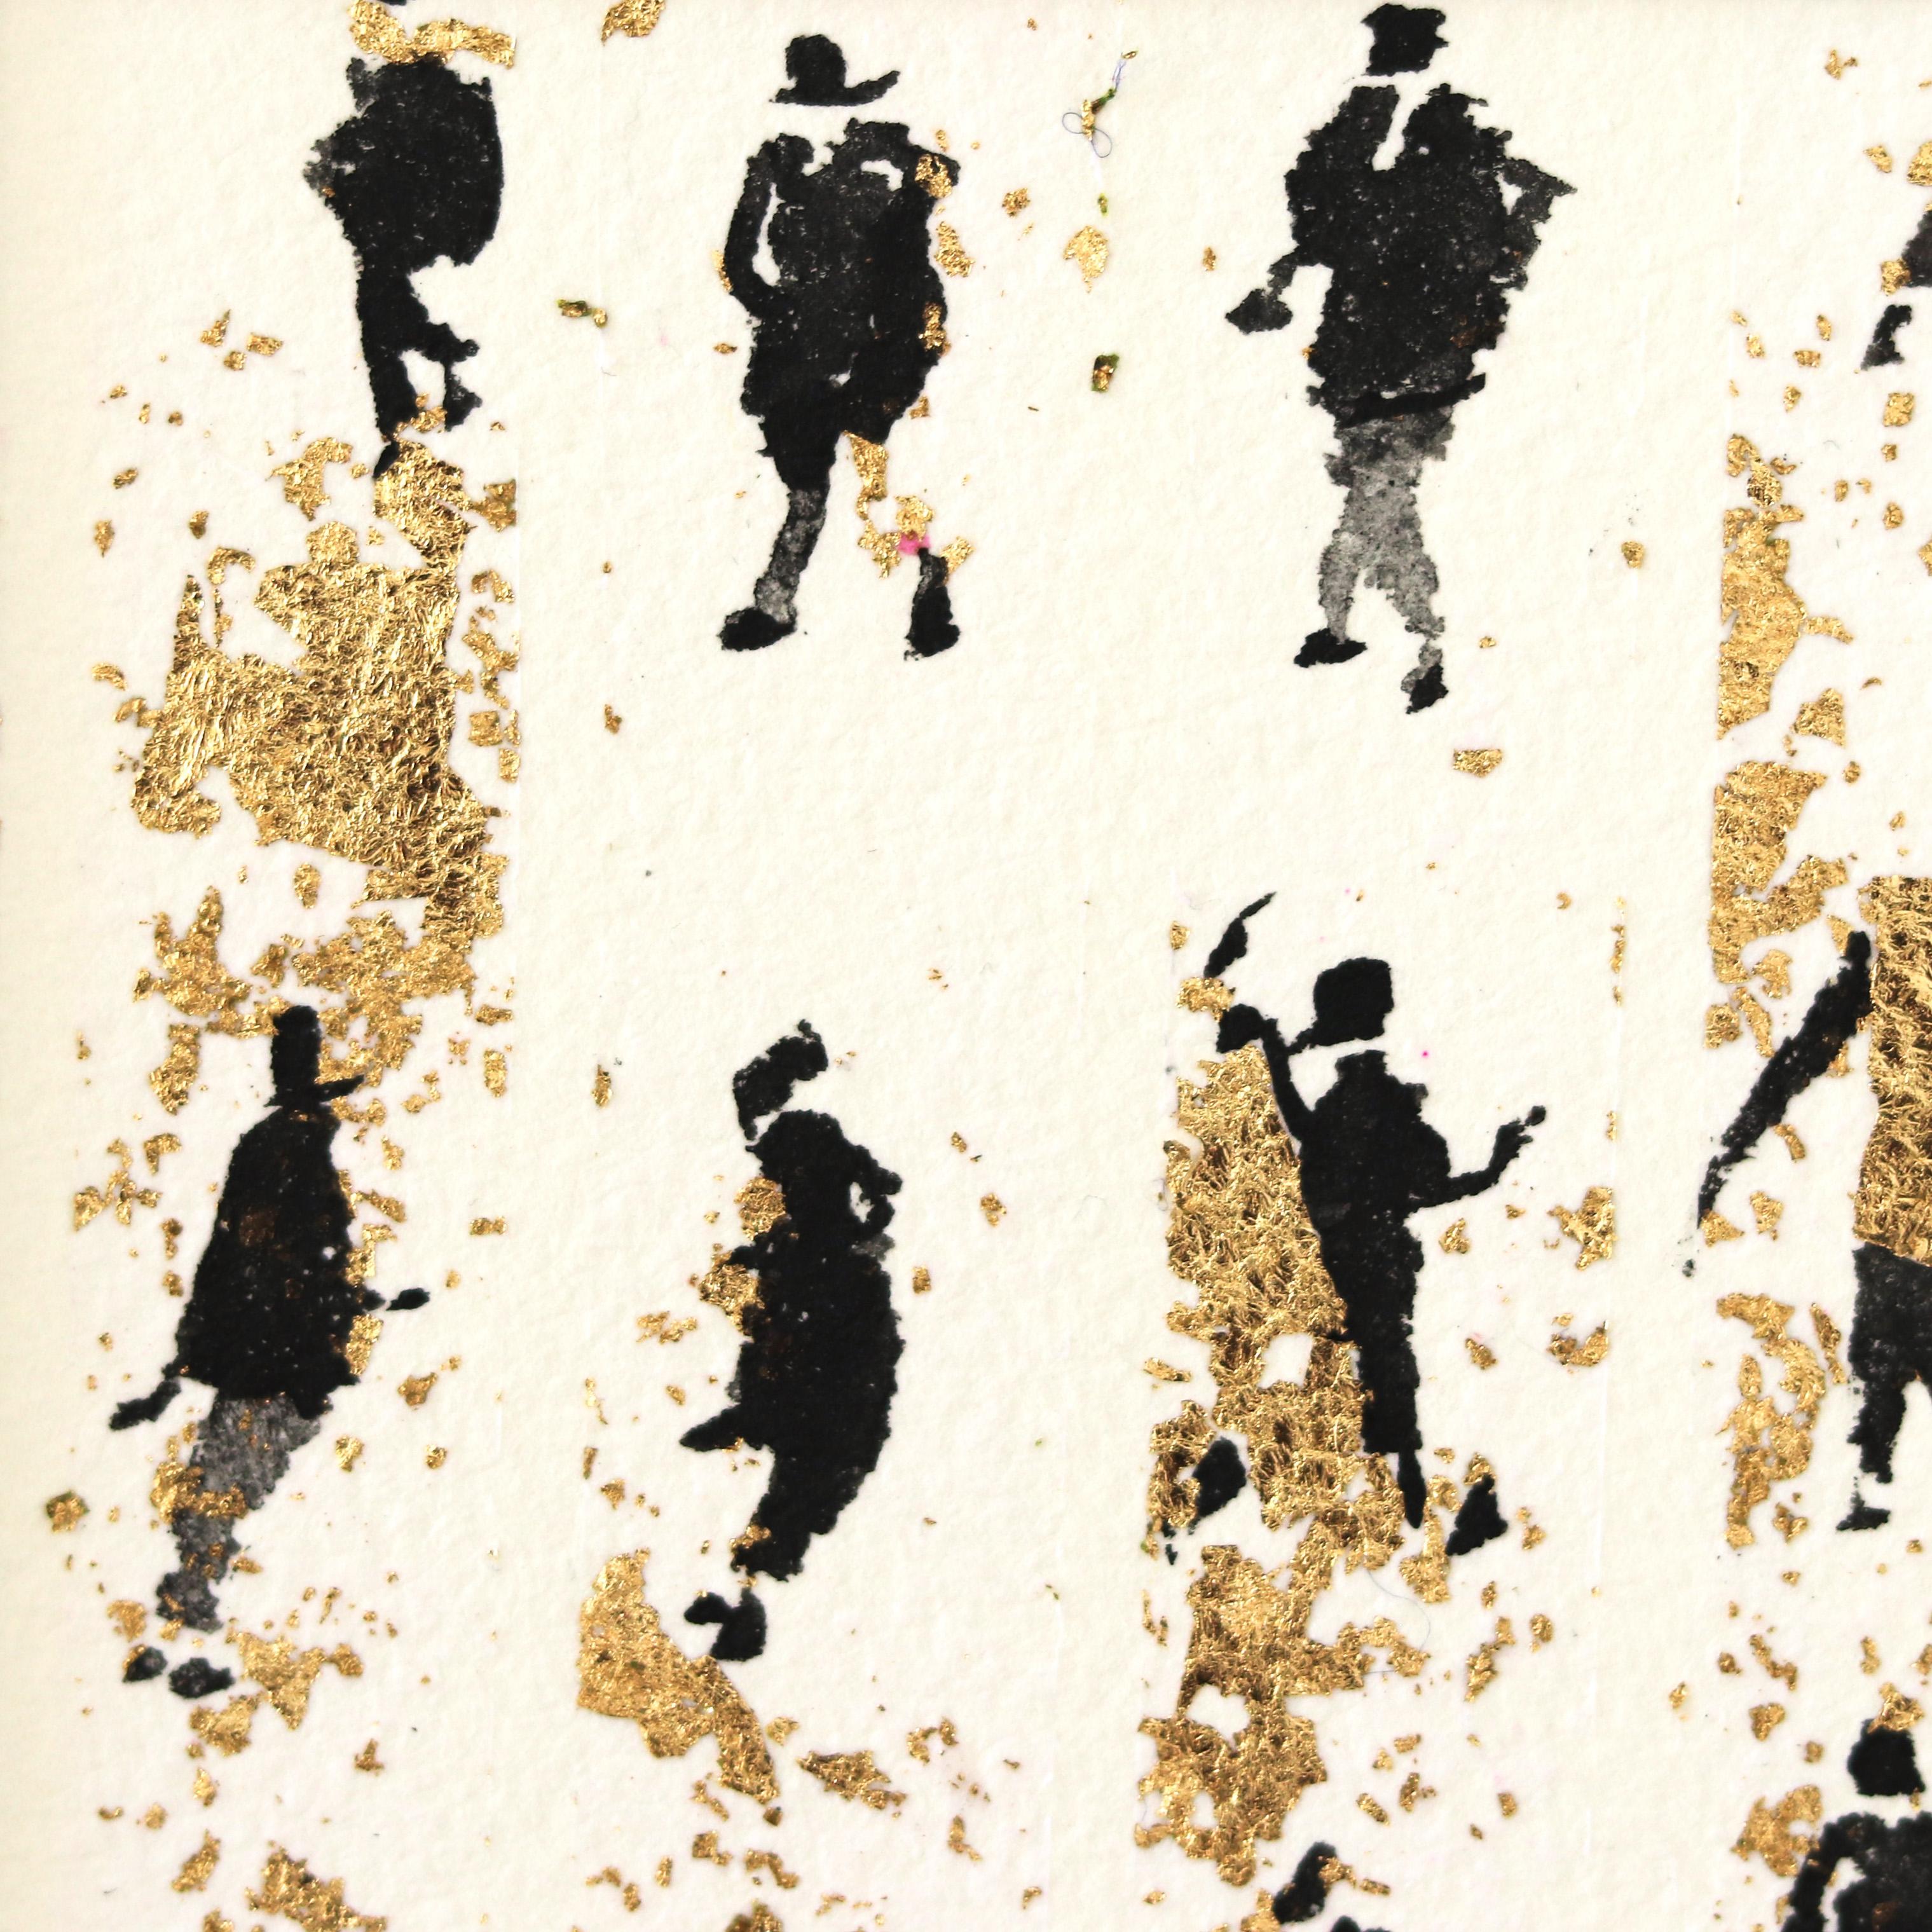 Ordenado  - Original Ink on Paper Artwork with Gold Leaf - Contemporary Mixed Media Art by Juana Cespedes